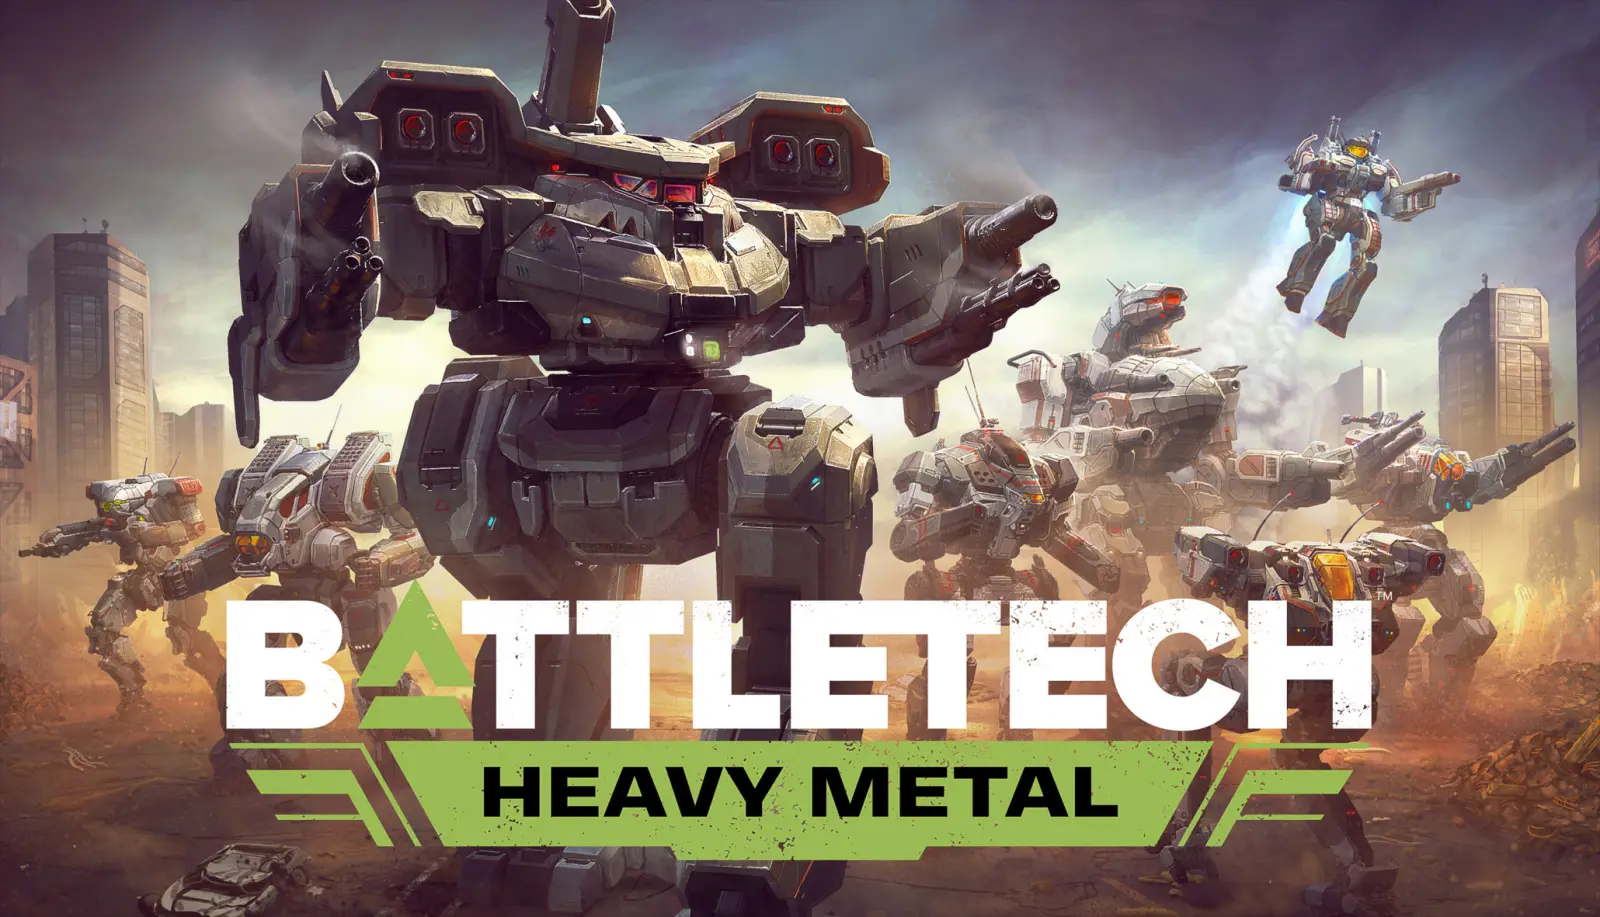 《BattleTech》新DLC “HeavyMetal”将于11月21日发售